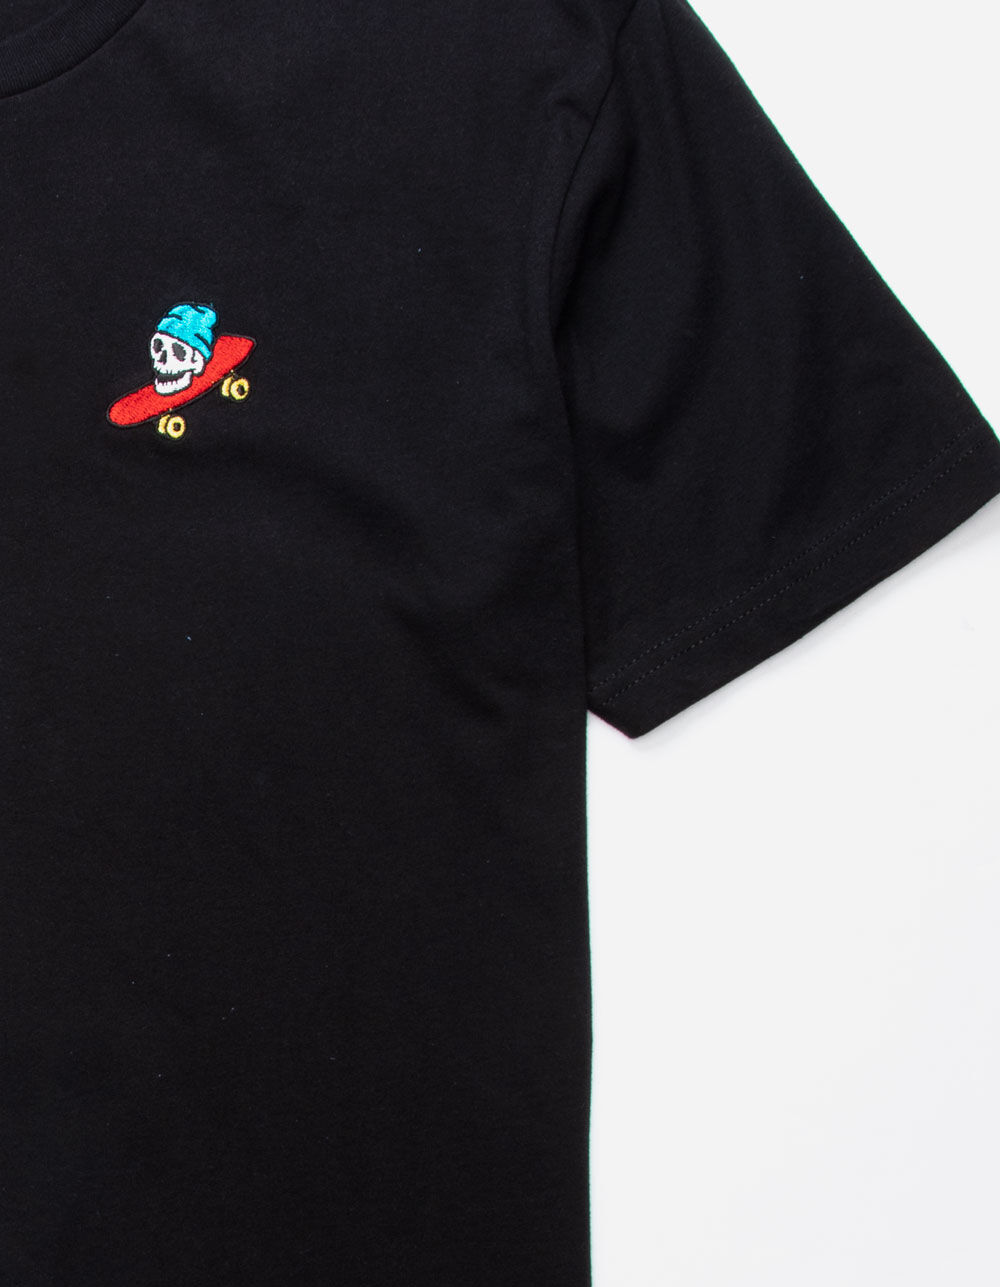 RIOT SOCIETY Skate Skeleton Head Embroidered Mens T-Shirt - BLACK | Tillys